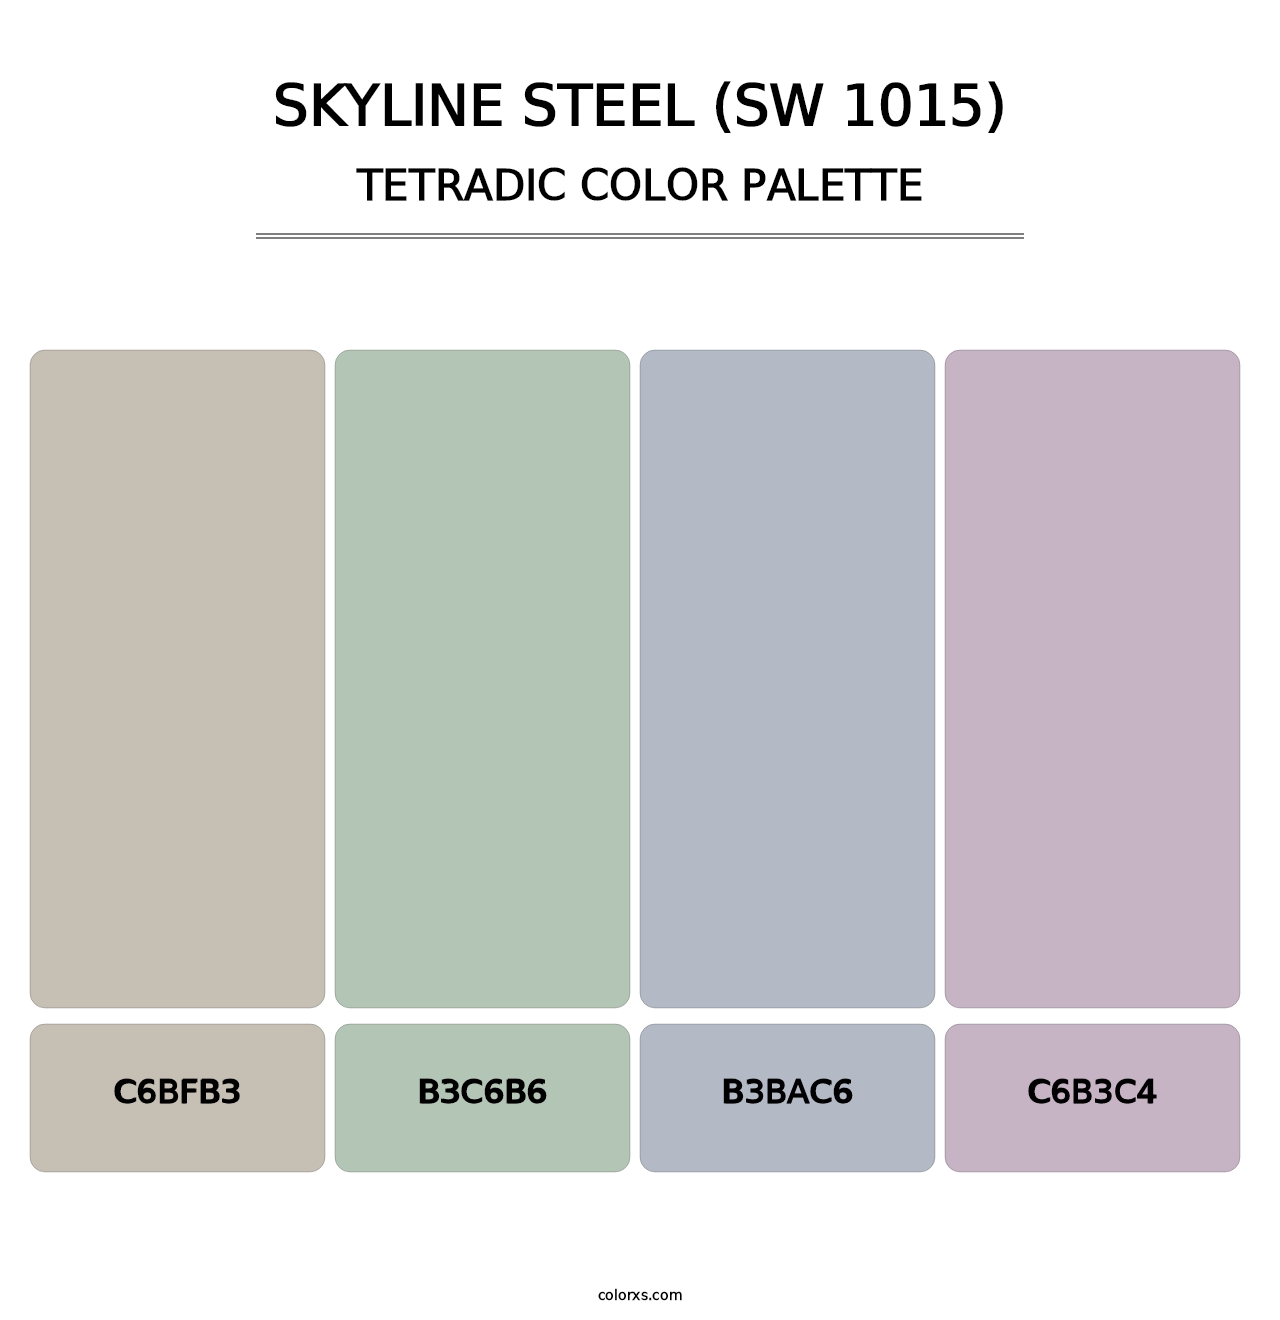 Skyline Steel (SW 1015) - Tetradic Color Palette